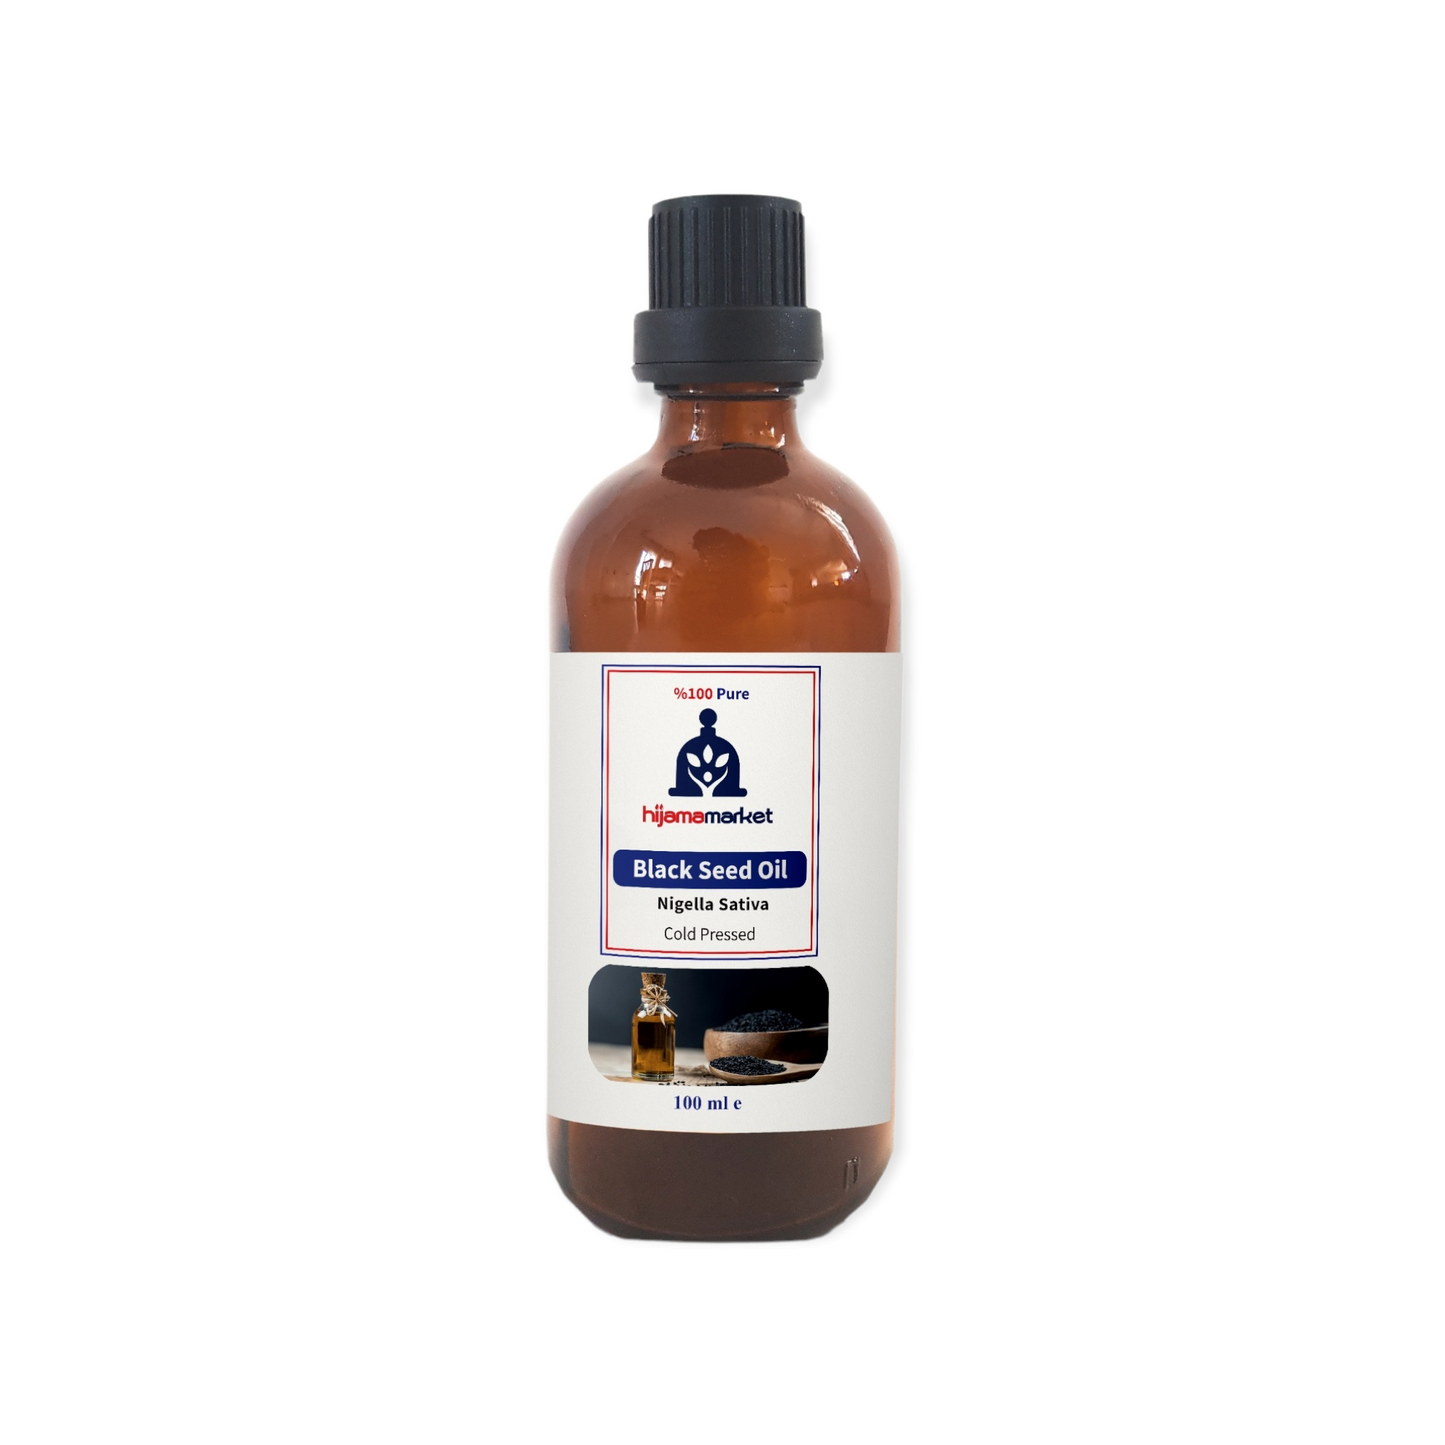 Black Seed Oil (Black Cumin Oil) Nigella Sativa %100 Pure - Cold Pressed - 100ml